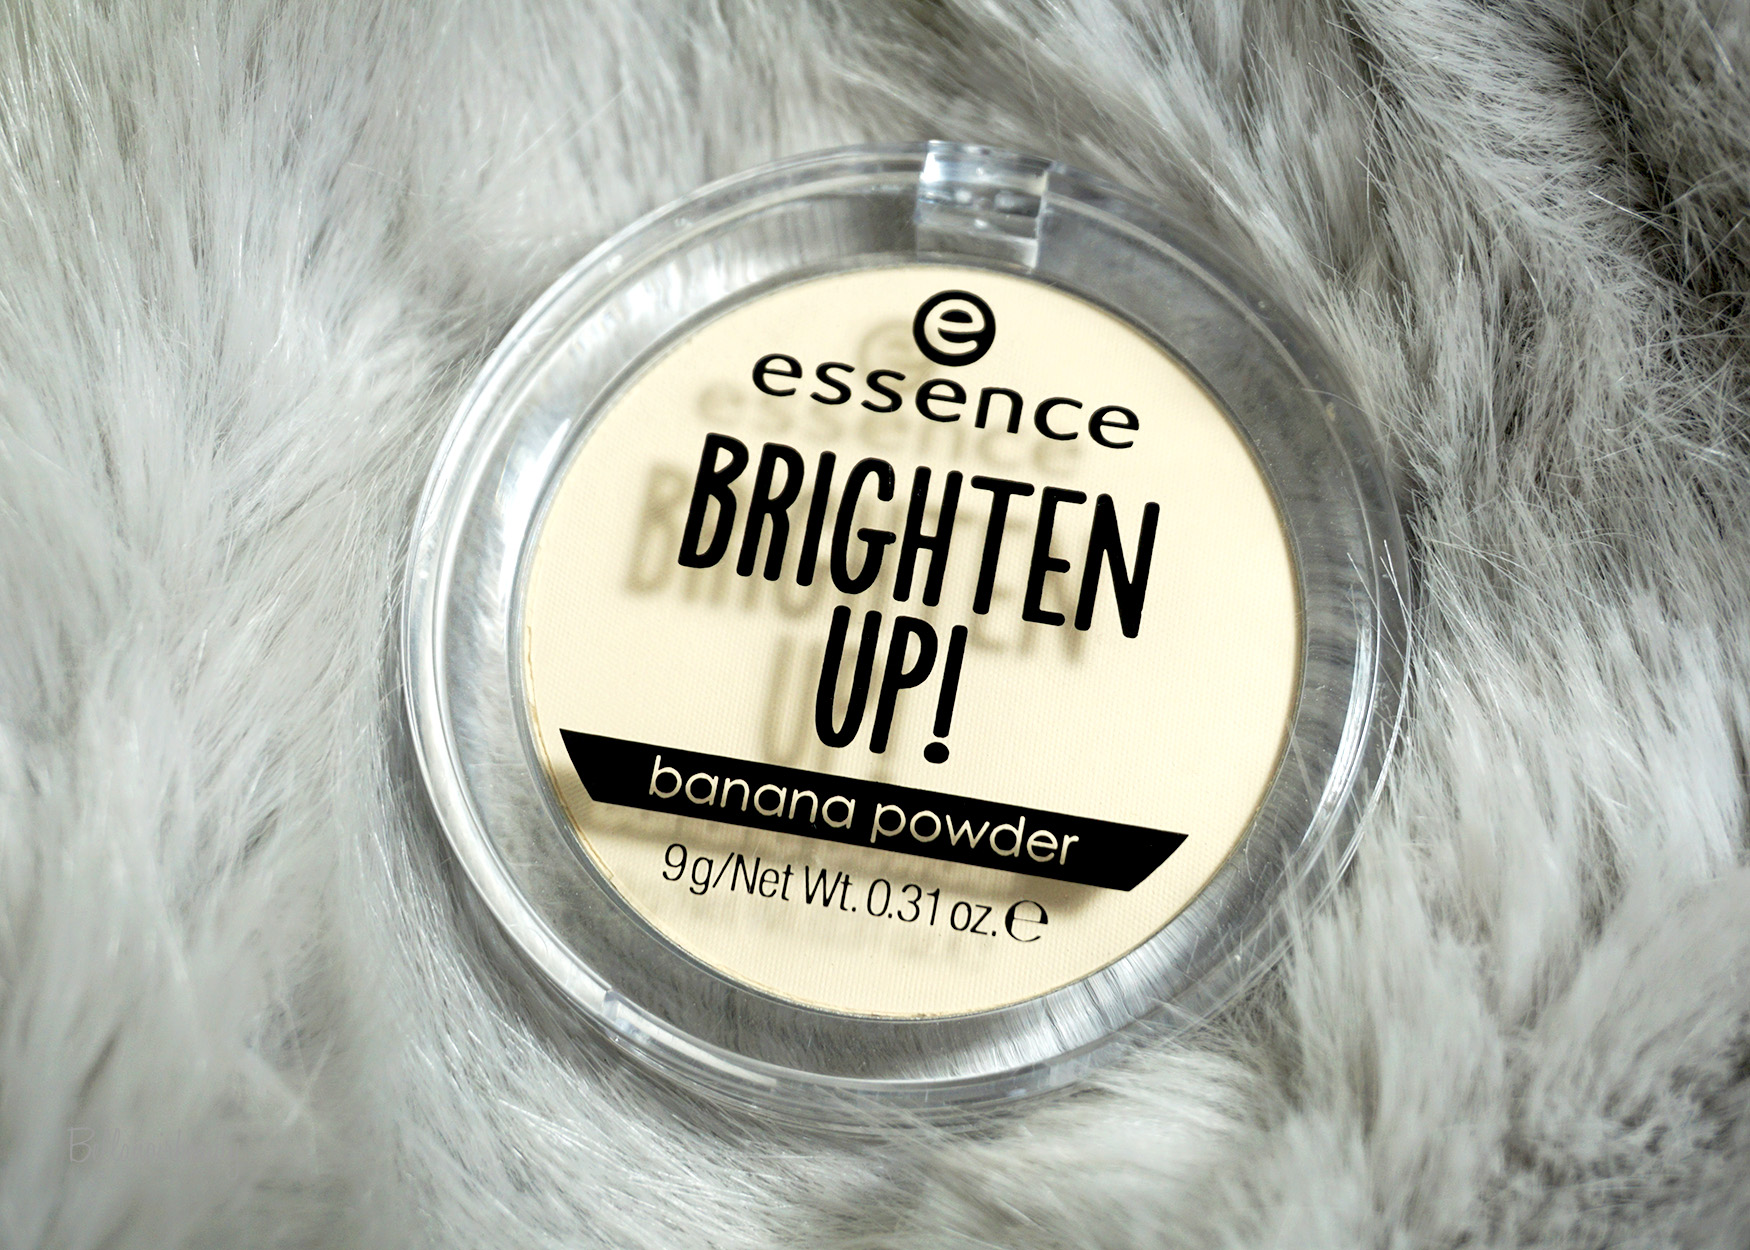 Essence Brighten Up Banana Powder | bellanoirbeauty.com